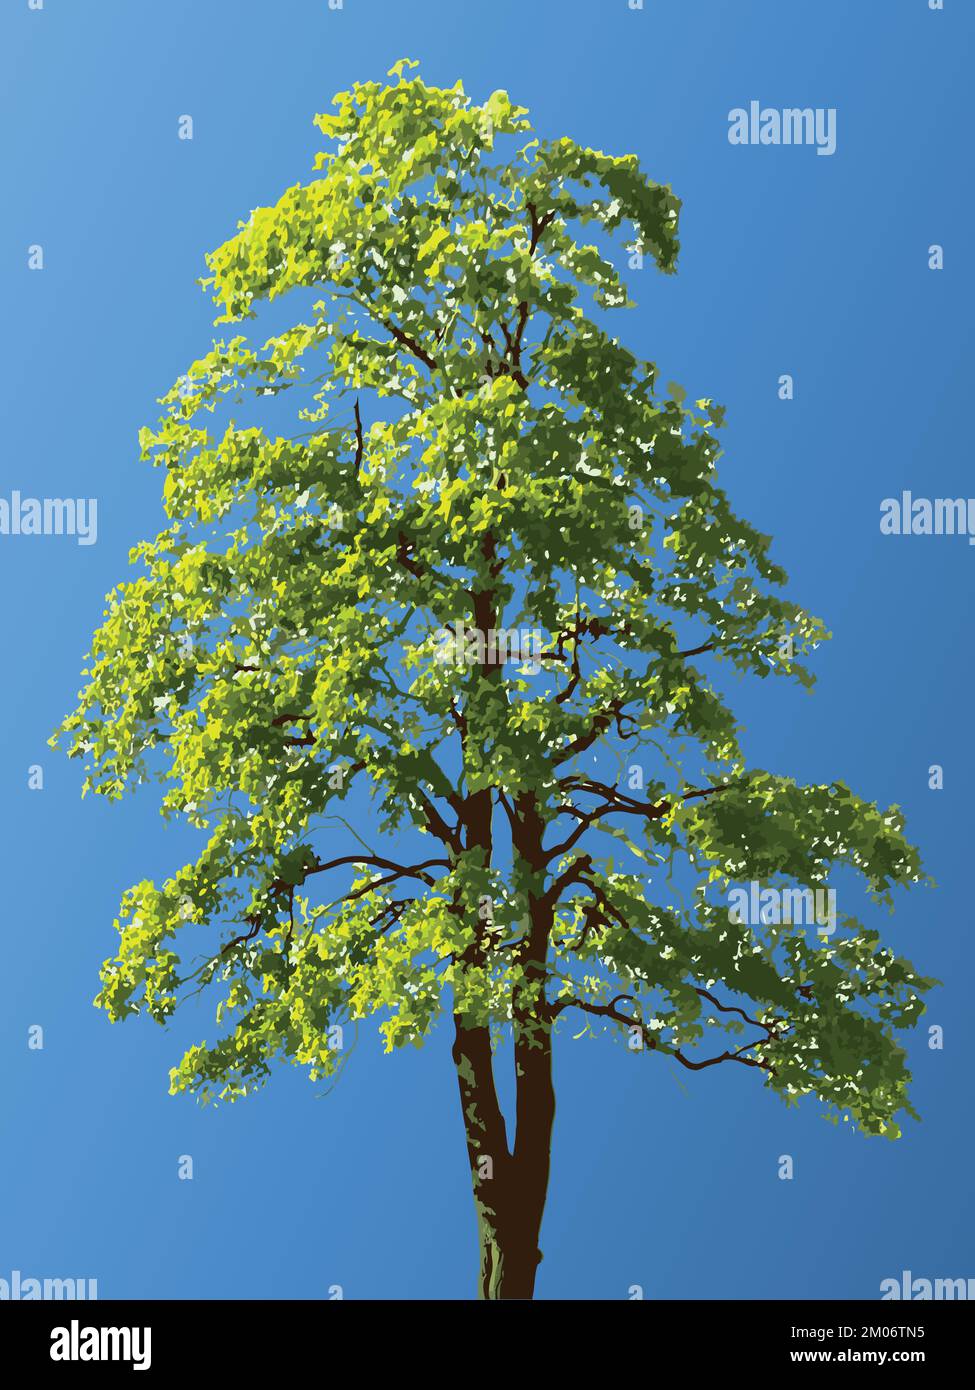 Broadleaf Stock Vector Images - Alamy